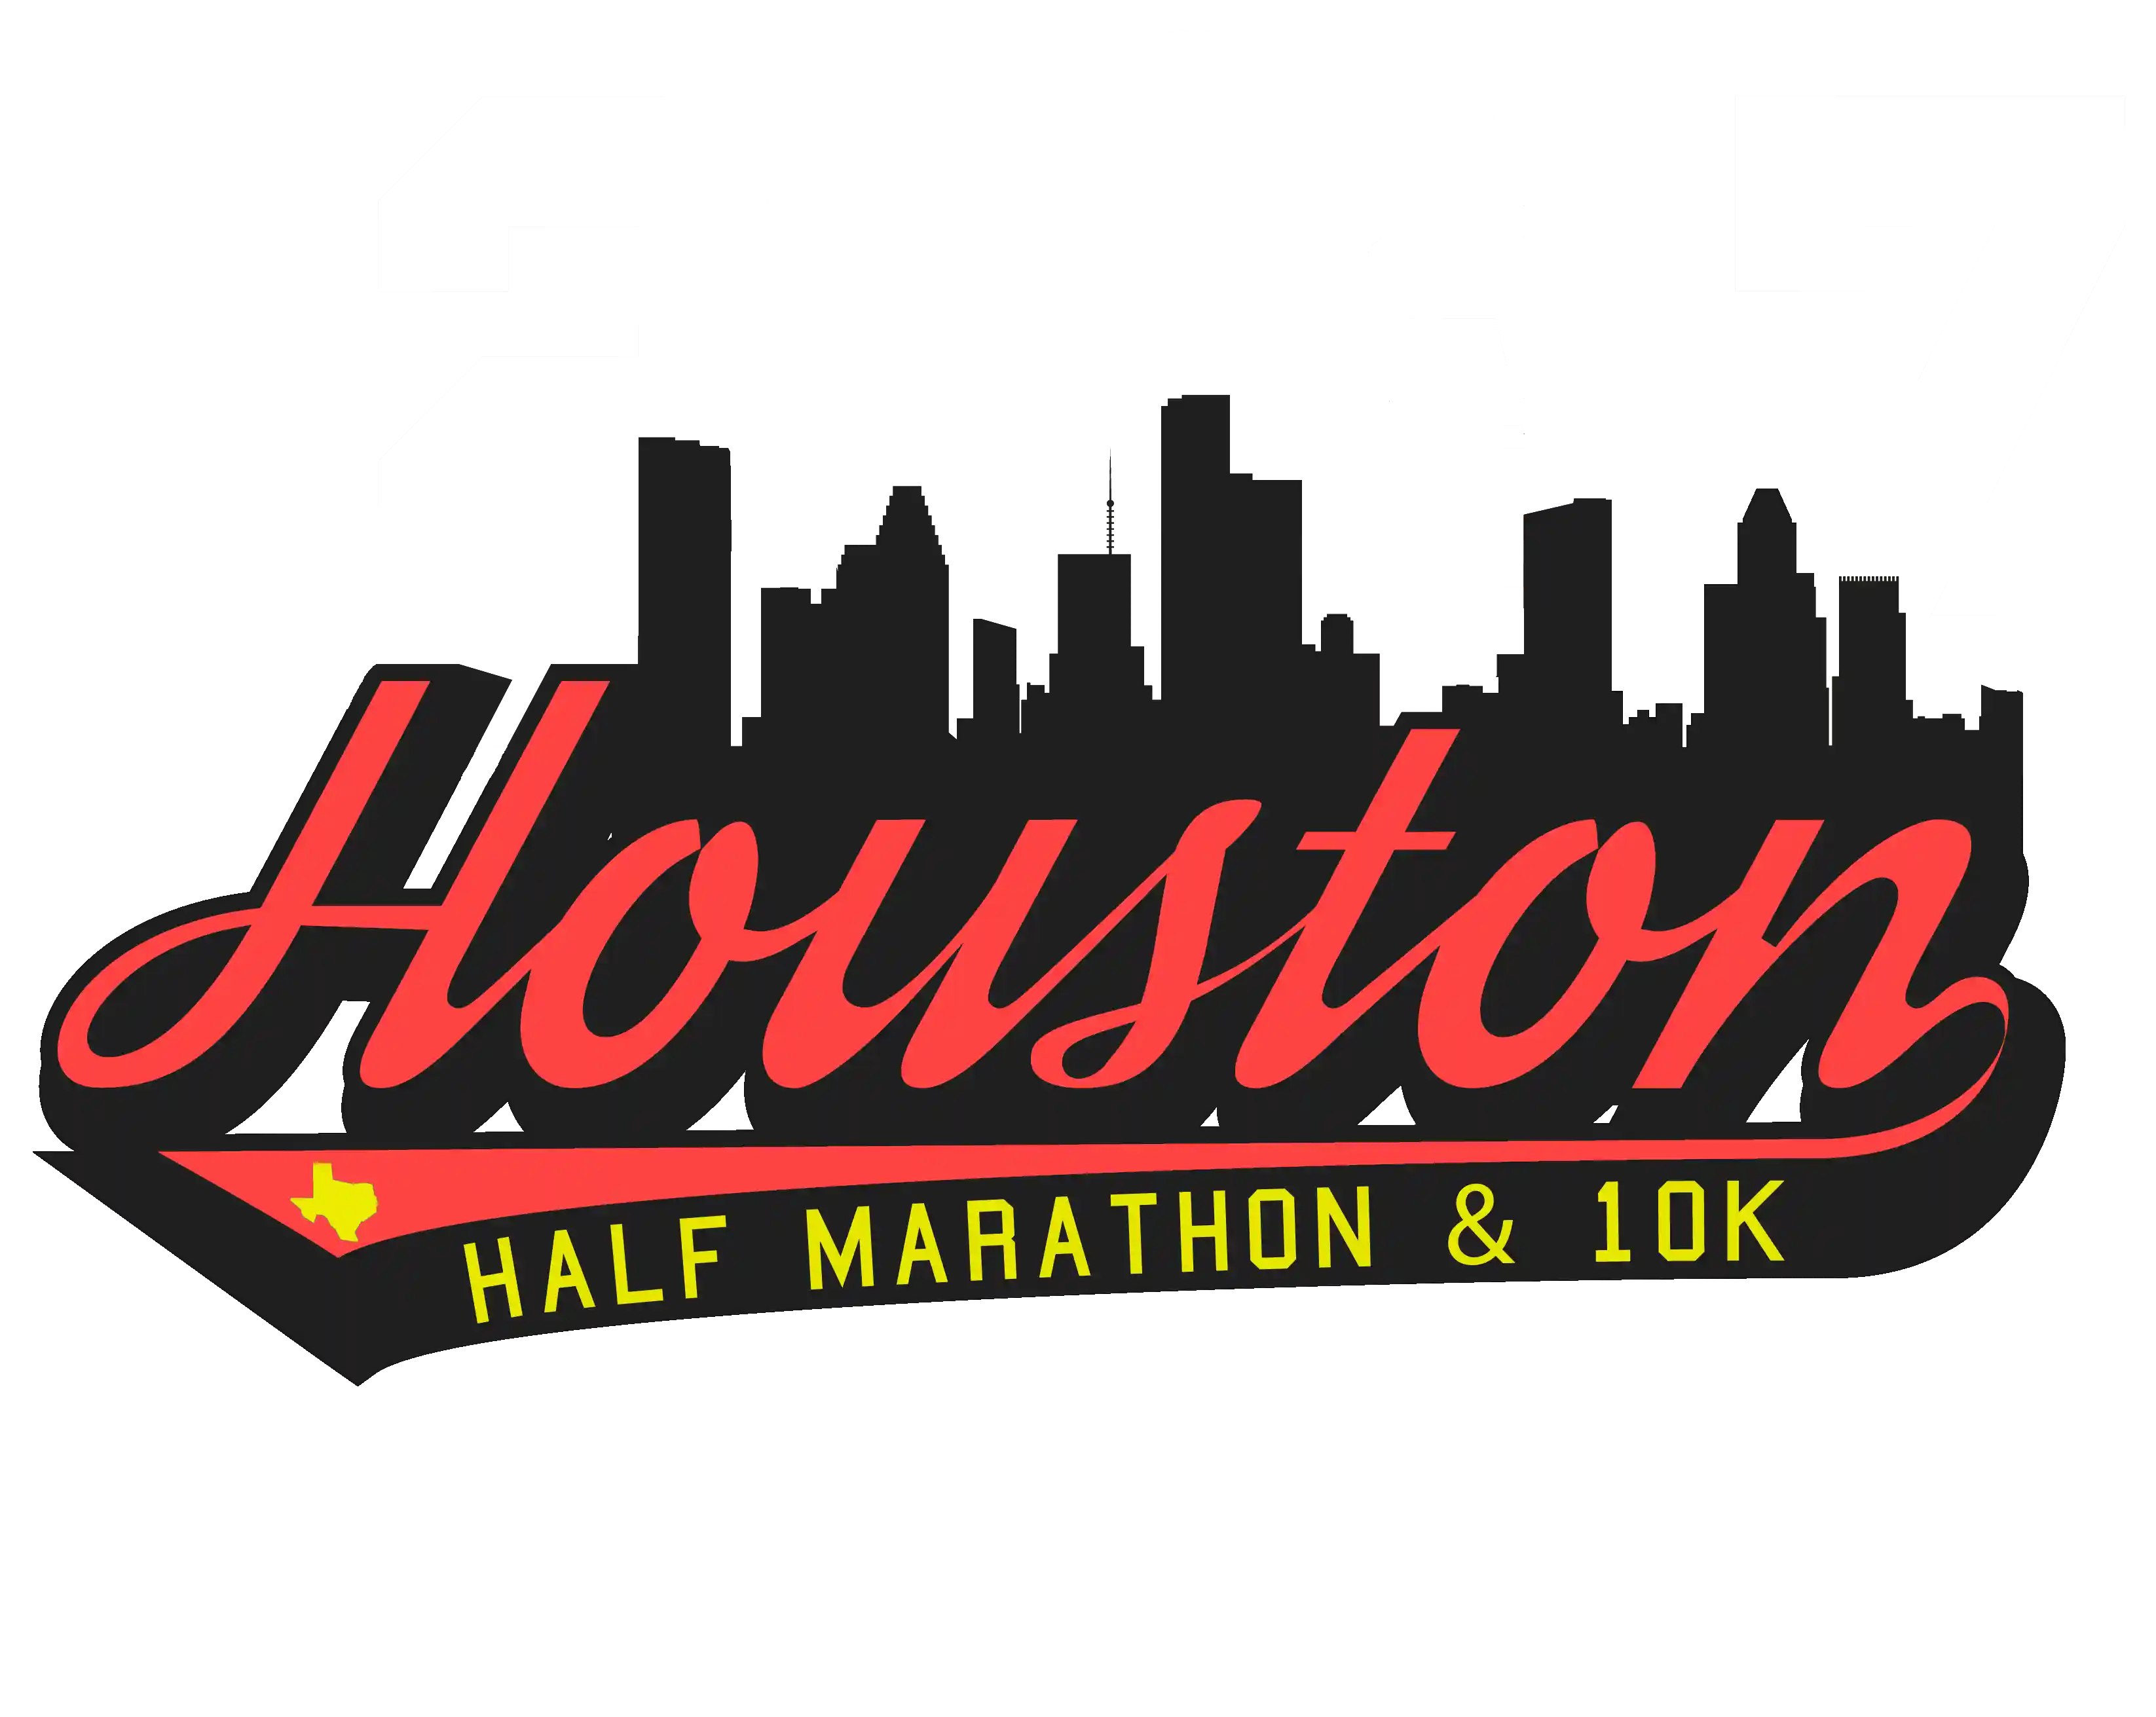 Houston Half